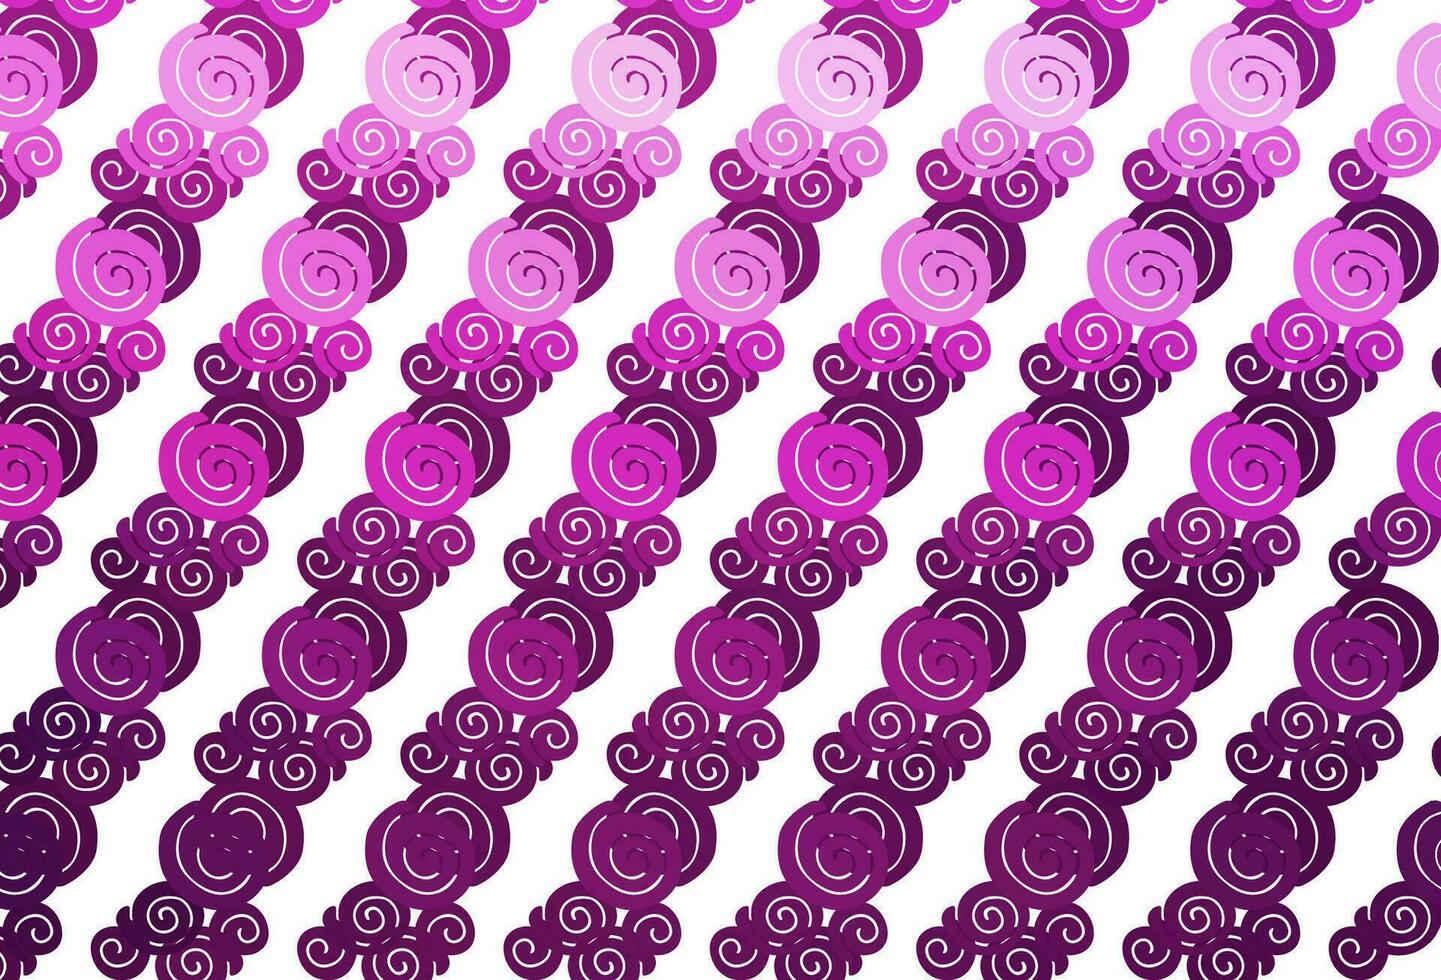 patrón vectorial rosa claro con cintas dobladas. vector